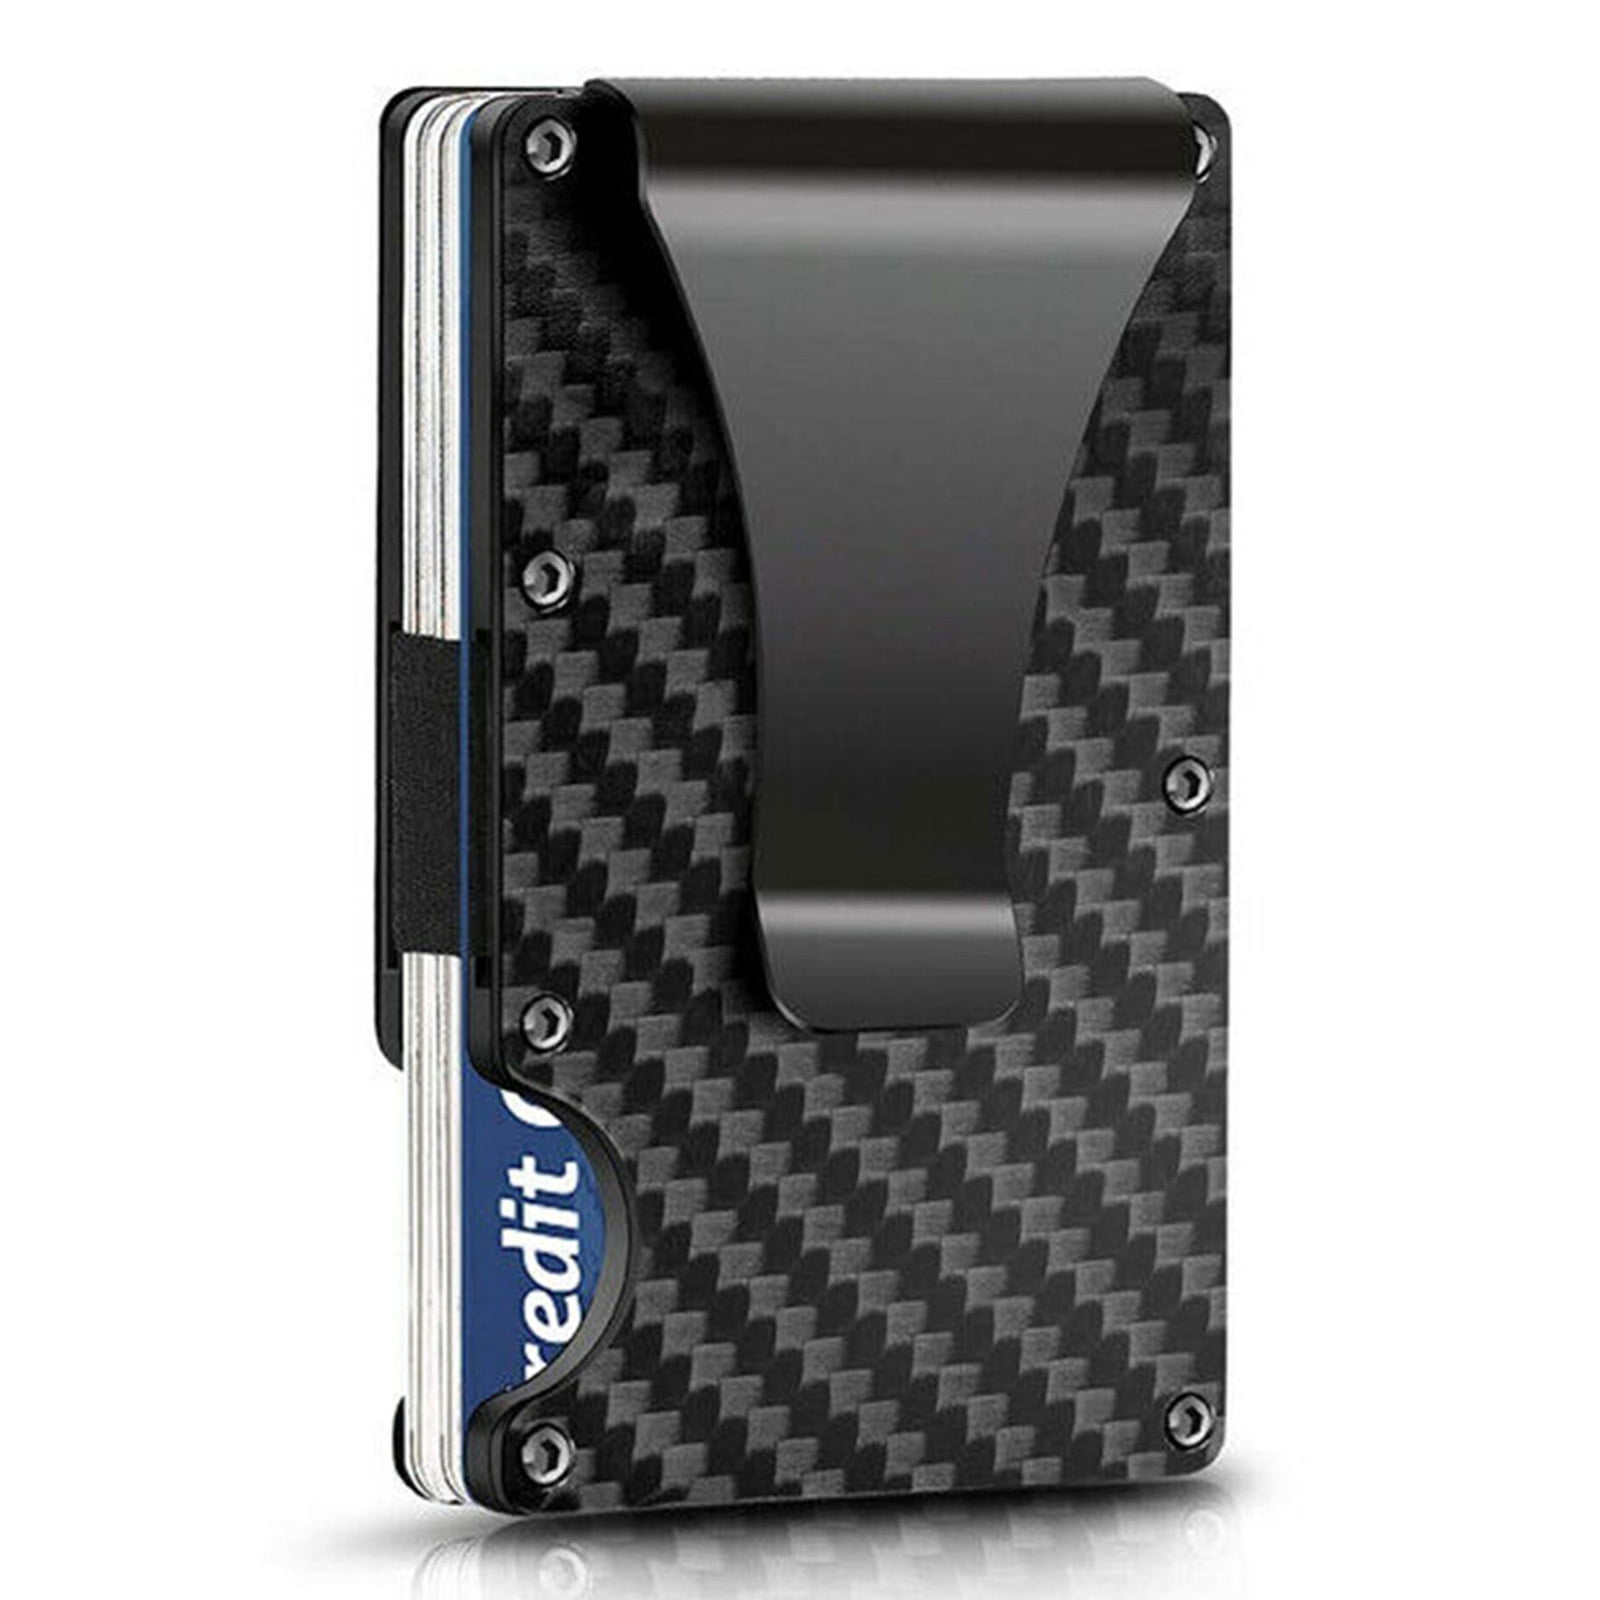 TUXON Front Pocket RFID Blocking Wallet with Cash Strap Clip Minimalist Fashion Card Holder for Men Mens Slim Wallet Carbon Fiber Wallet